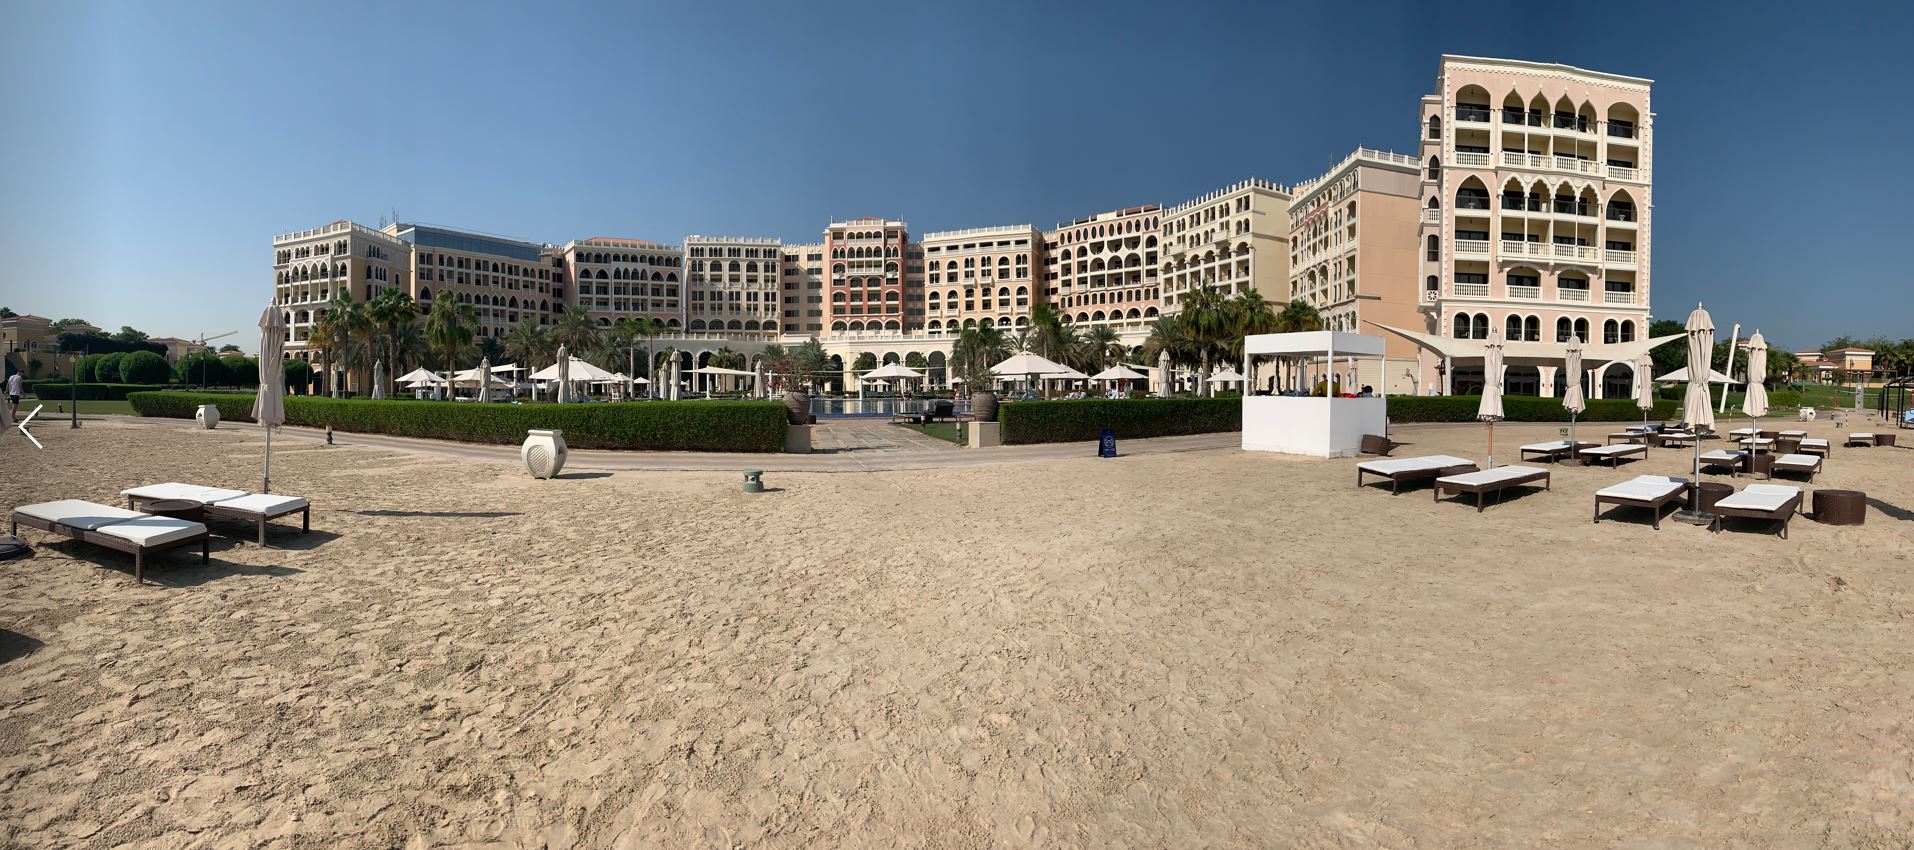 The Ritz-Carlton, Abu Dhabi, Grand Canal, UAE: